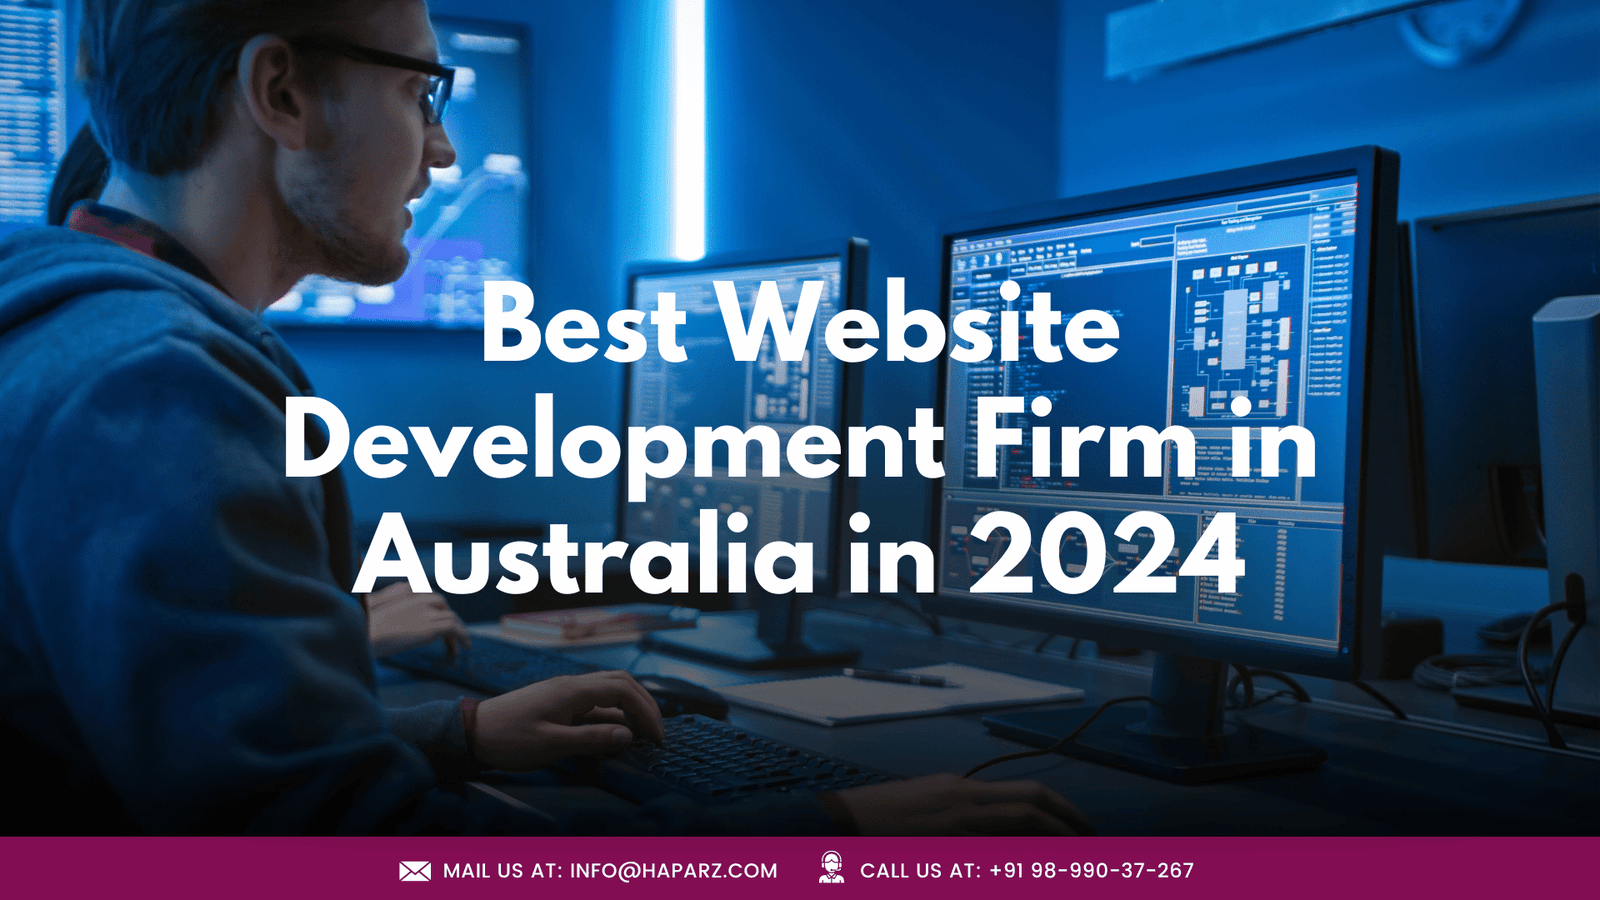 Best Website Development Firm in Australia in 2024